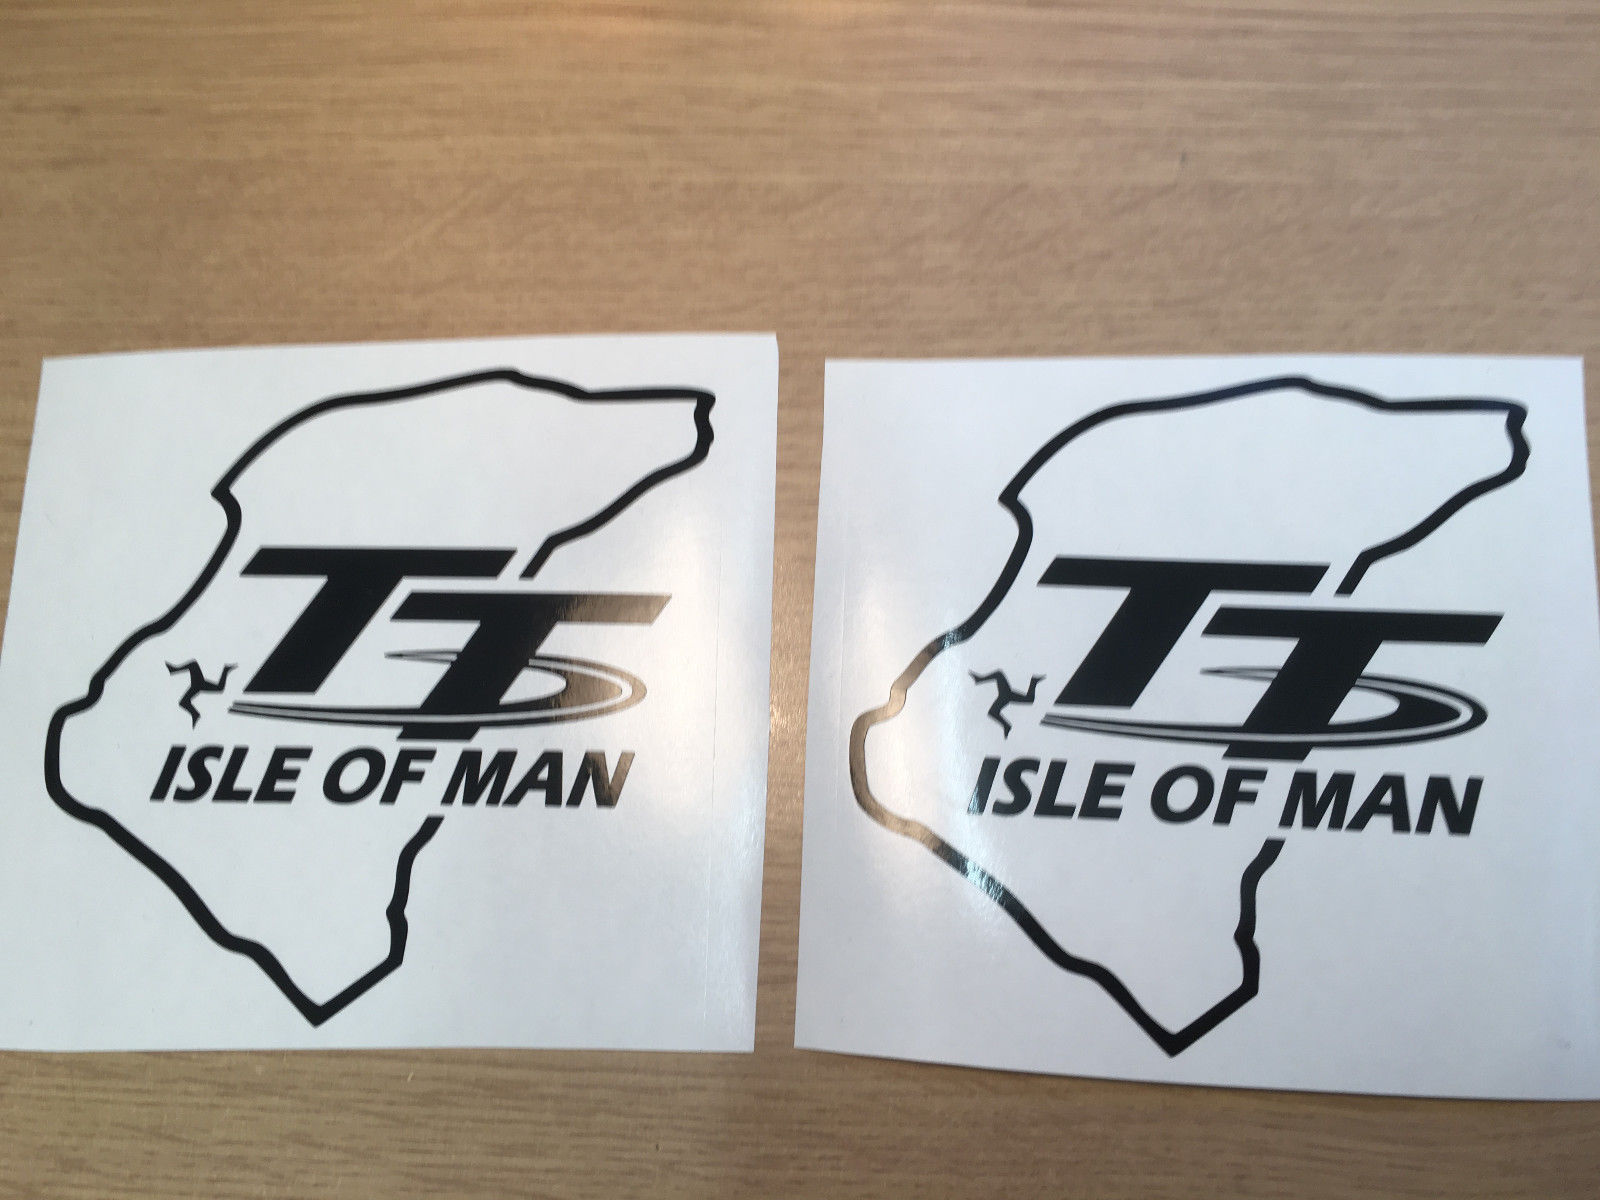 ISLE OF MAN TT RACE TRACK vinyl wall art sticker decal 